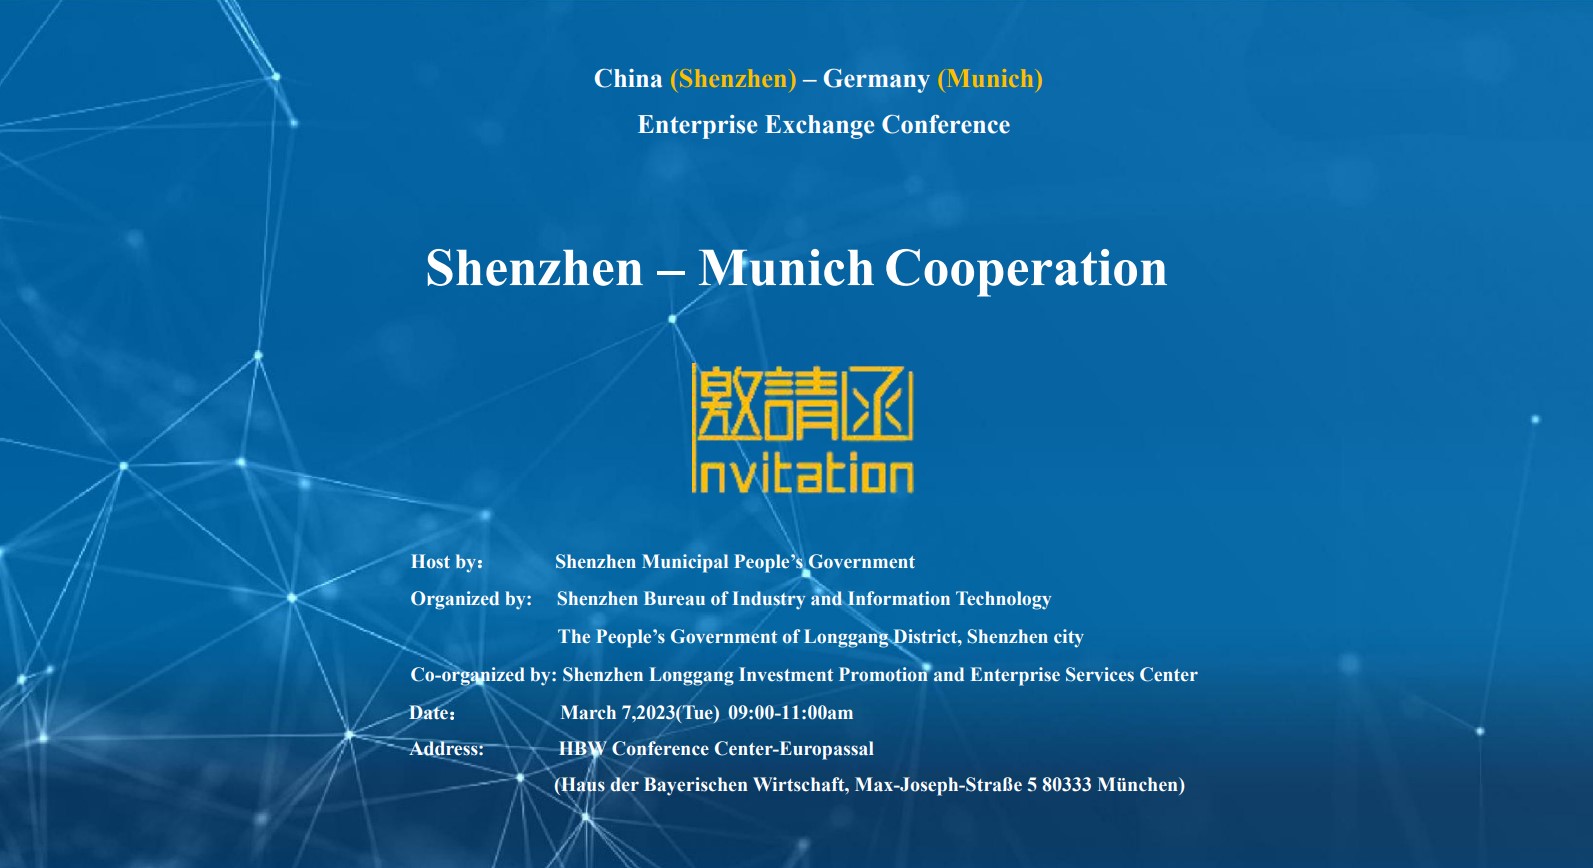 China (Shenzhen) - Germany (Munich) Enterprise Exchange Conference 2023